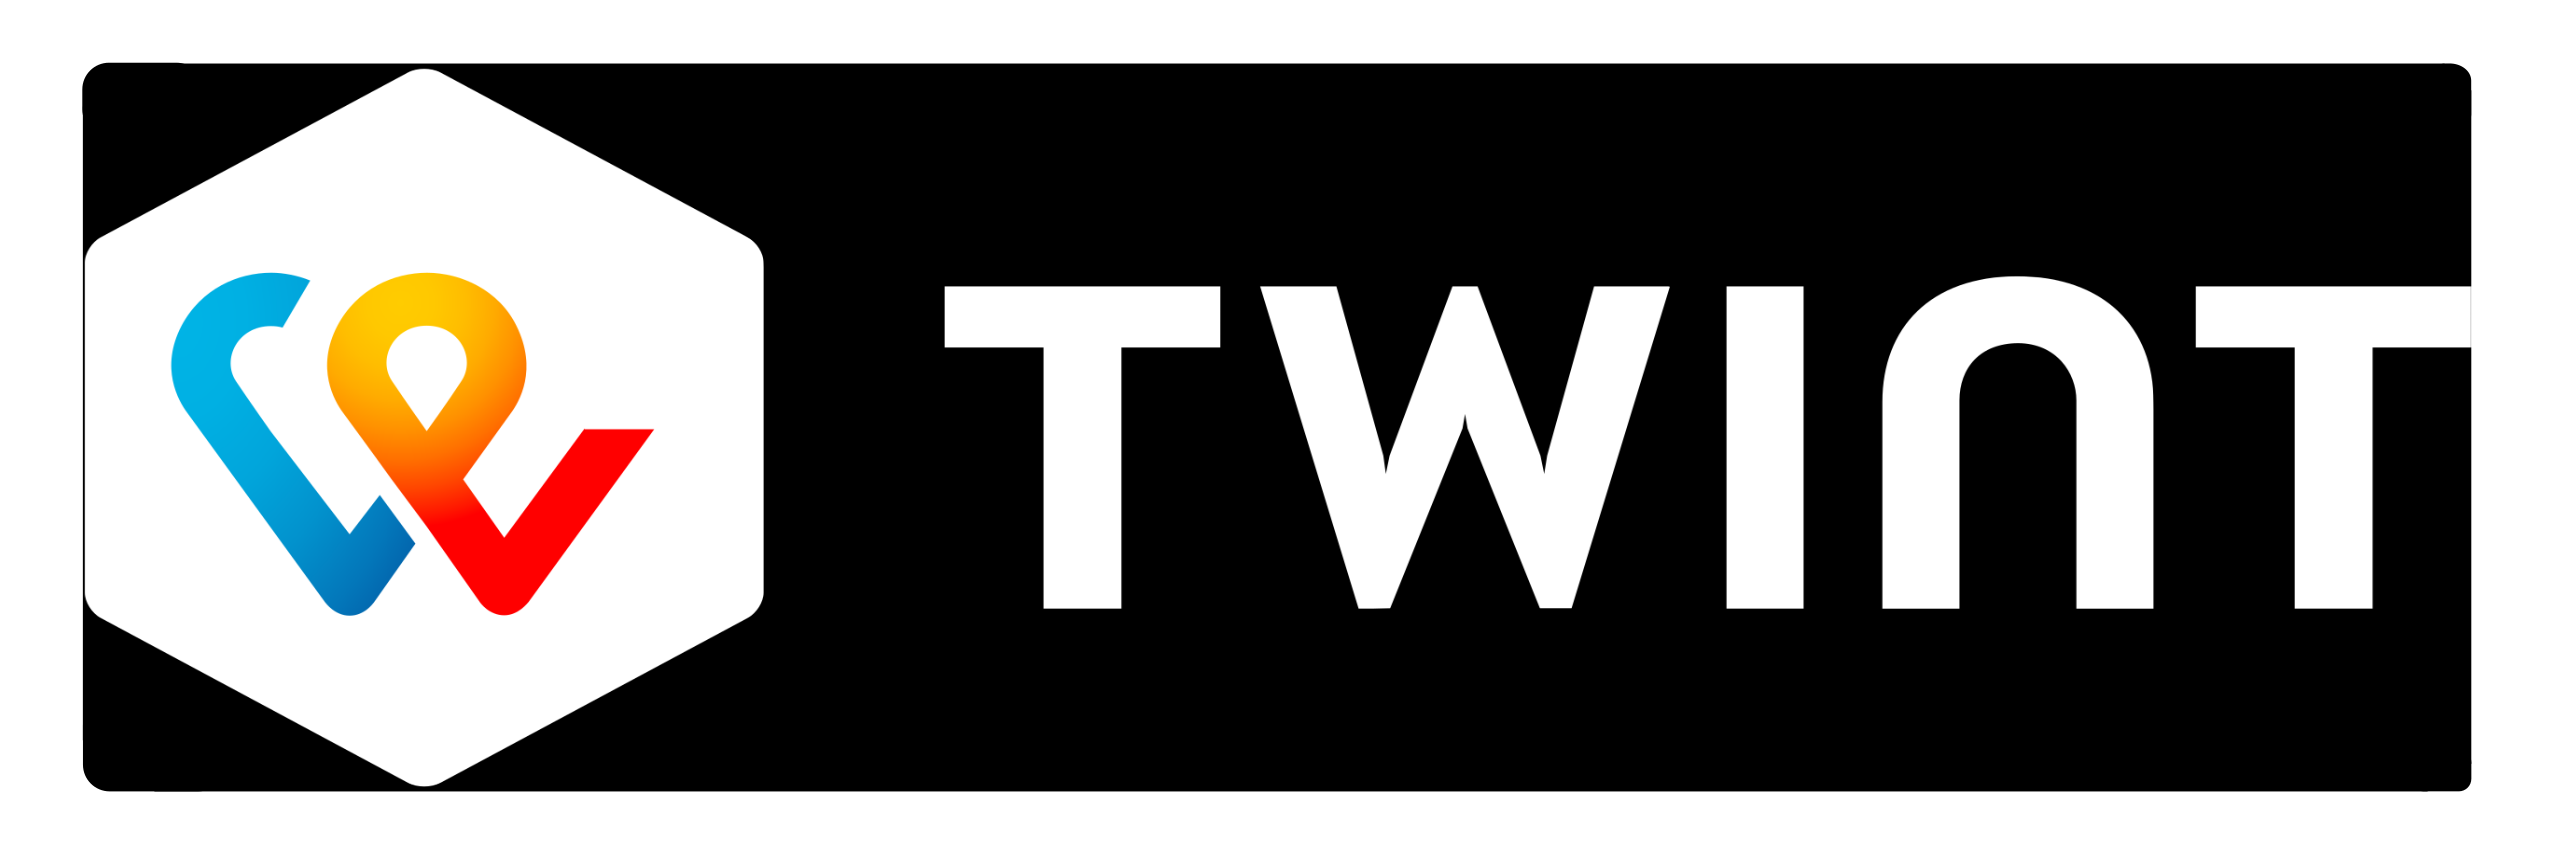 twint_logo